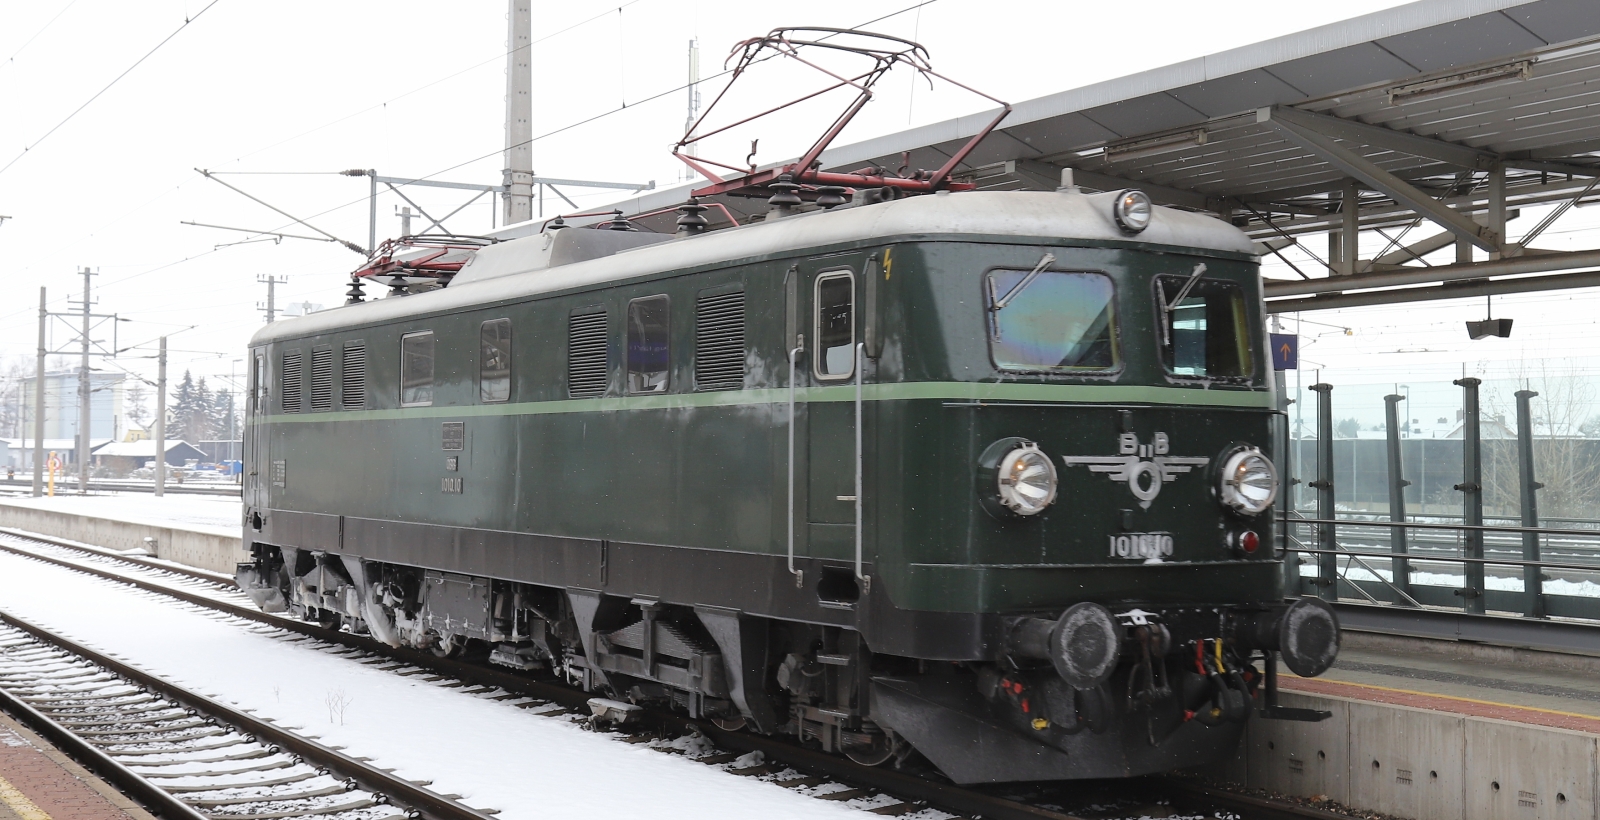 Museum locomotive 1010.10 in December 2018 at St. Valentin station